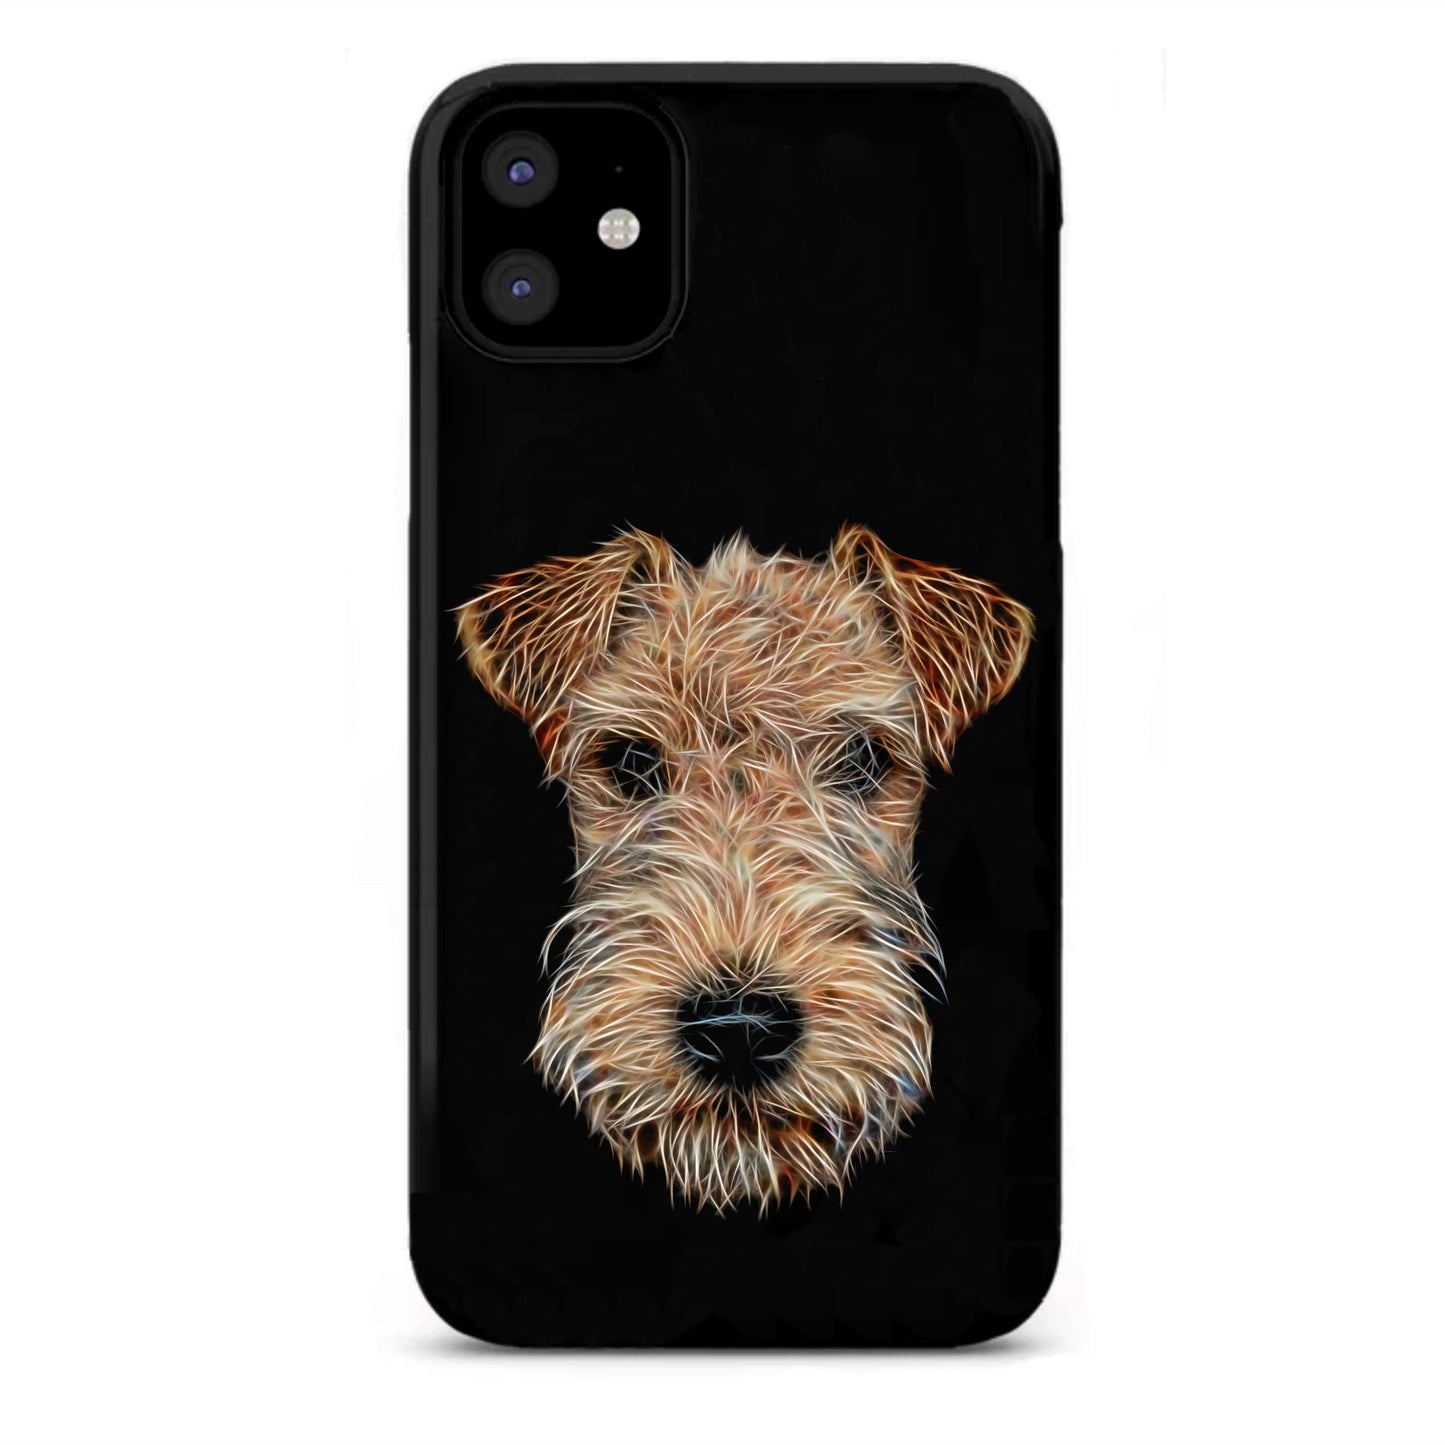 Lakeland Terrier Dog Phone Case with Stunning Fractal Art Design. For Samsung or iPhone.